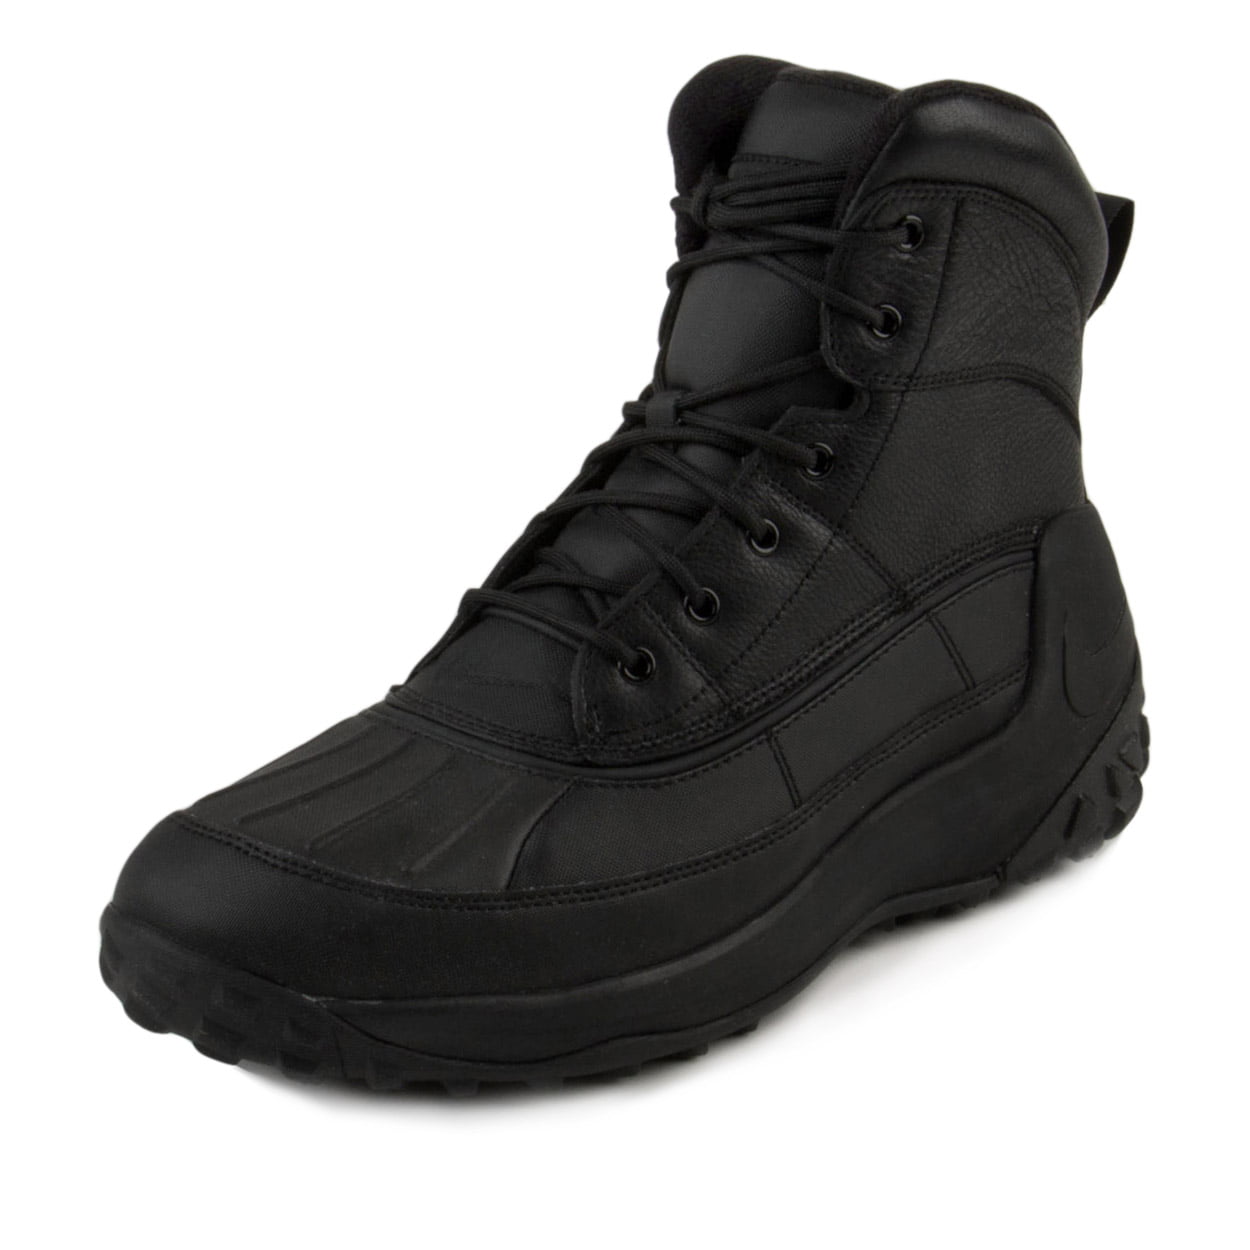 Nike Mens Kynwood Black 862504-001 